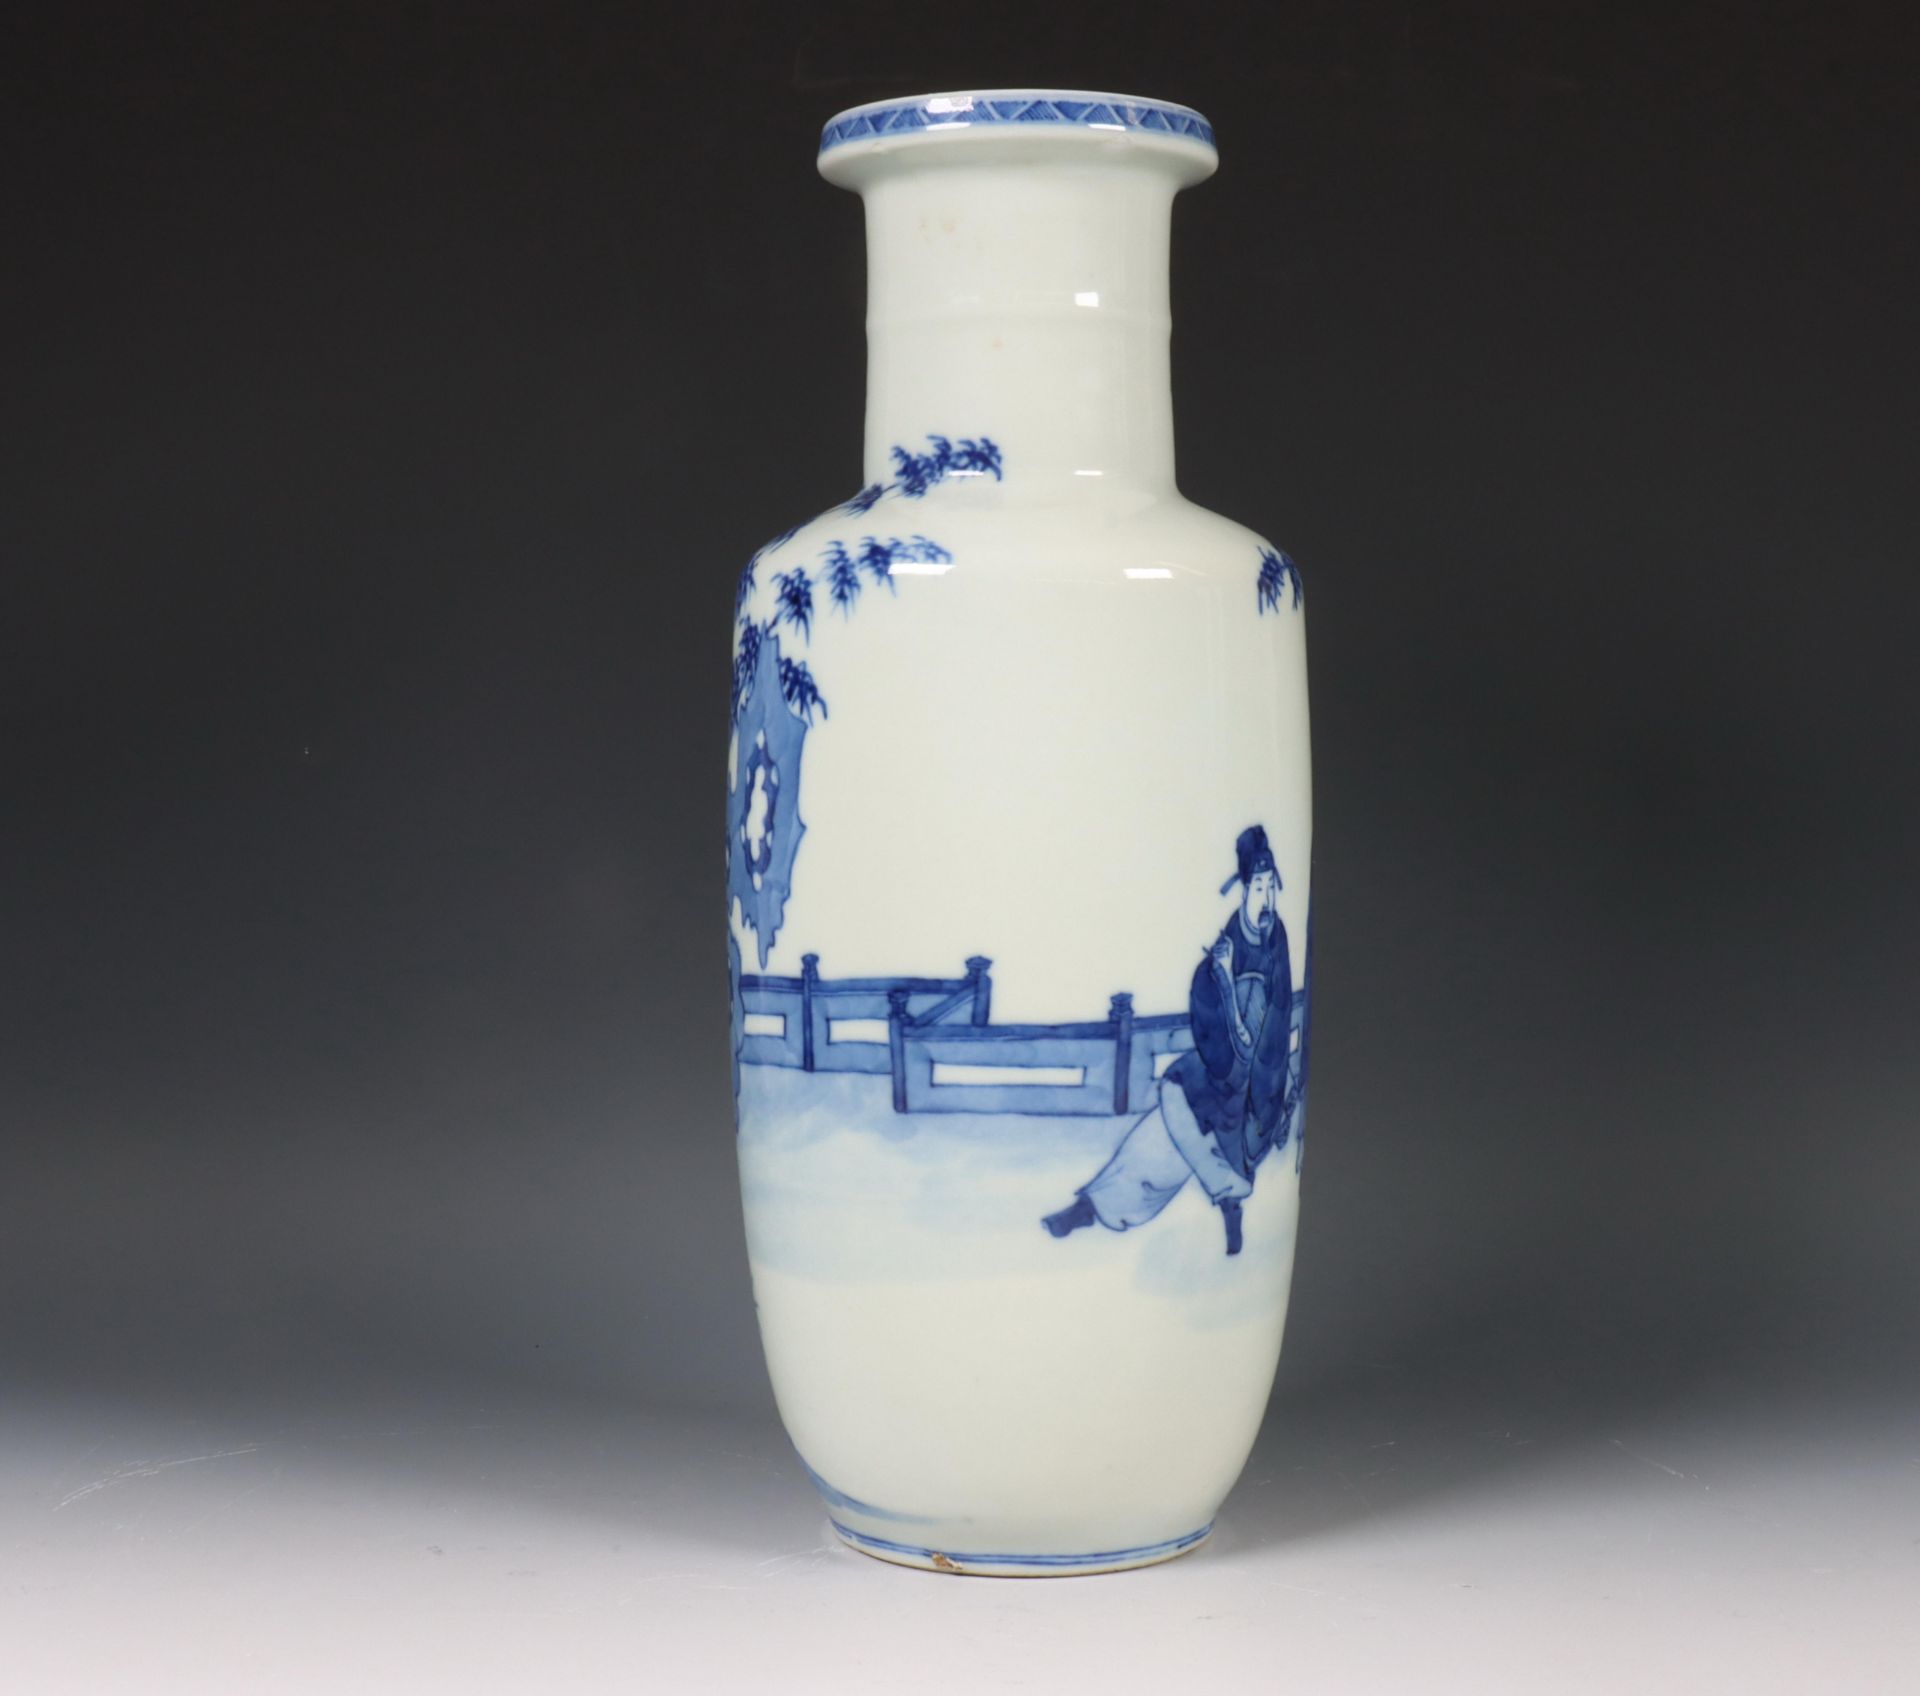 China, blauw-wit porseleinen rolvaas, 19e/20e eeuw, - Bild 3 aus 5